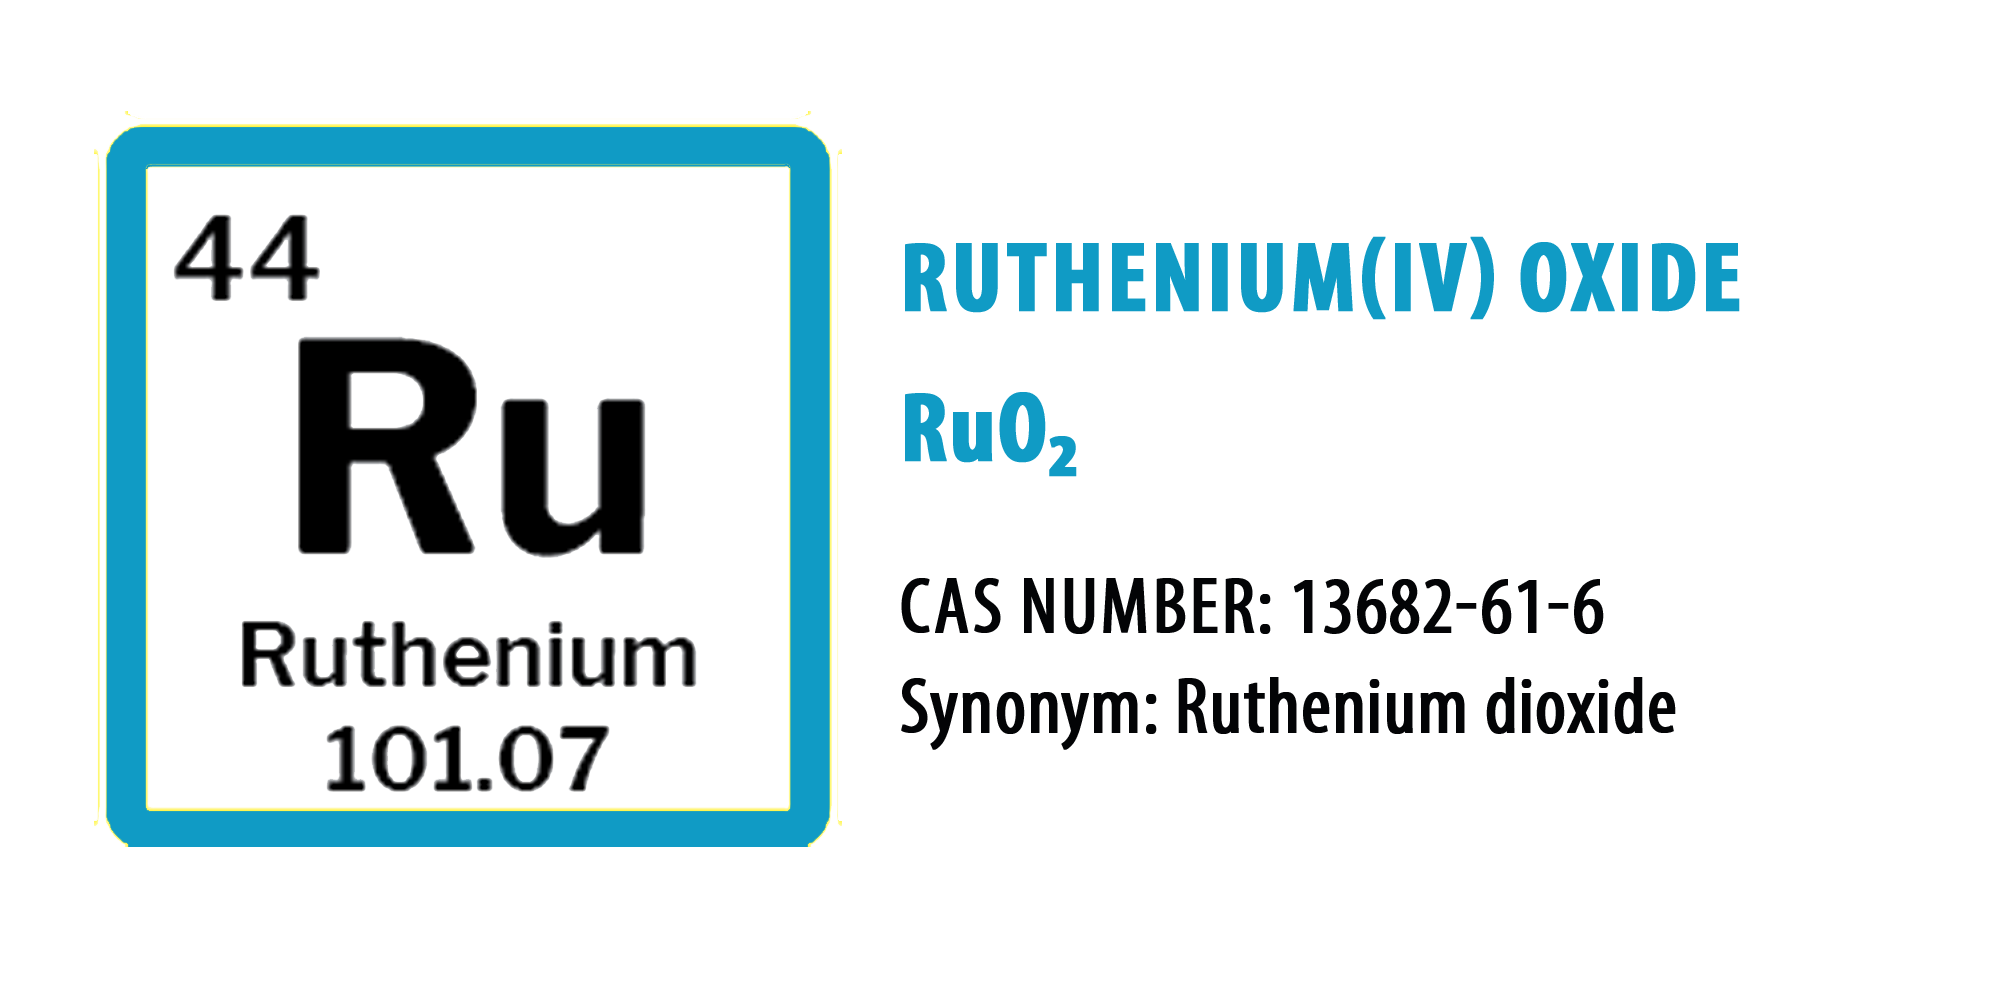 Ruthenium(IV) oxide